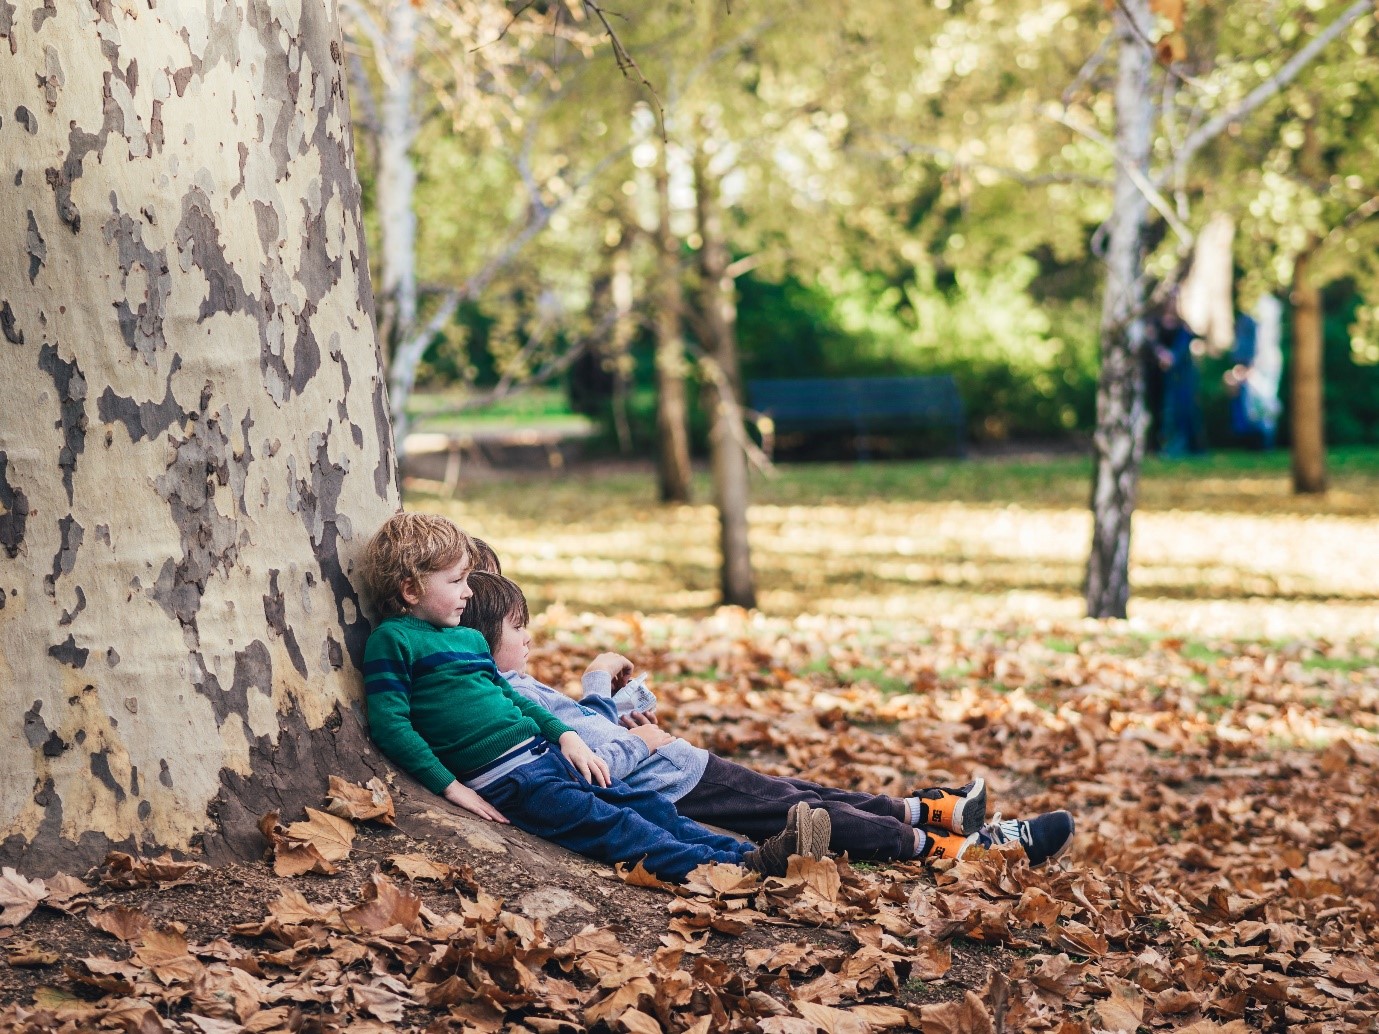 Children sitting at the base of a tree. Photo by Markus Spiske on Unsplash.